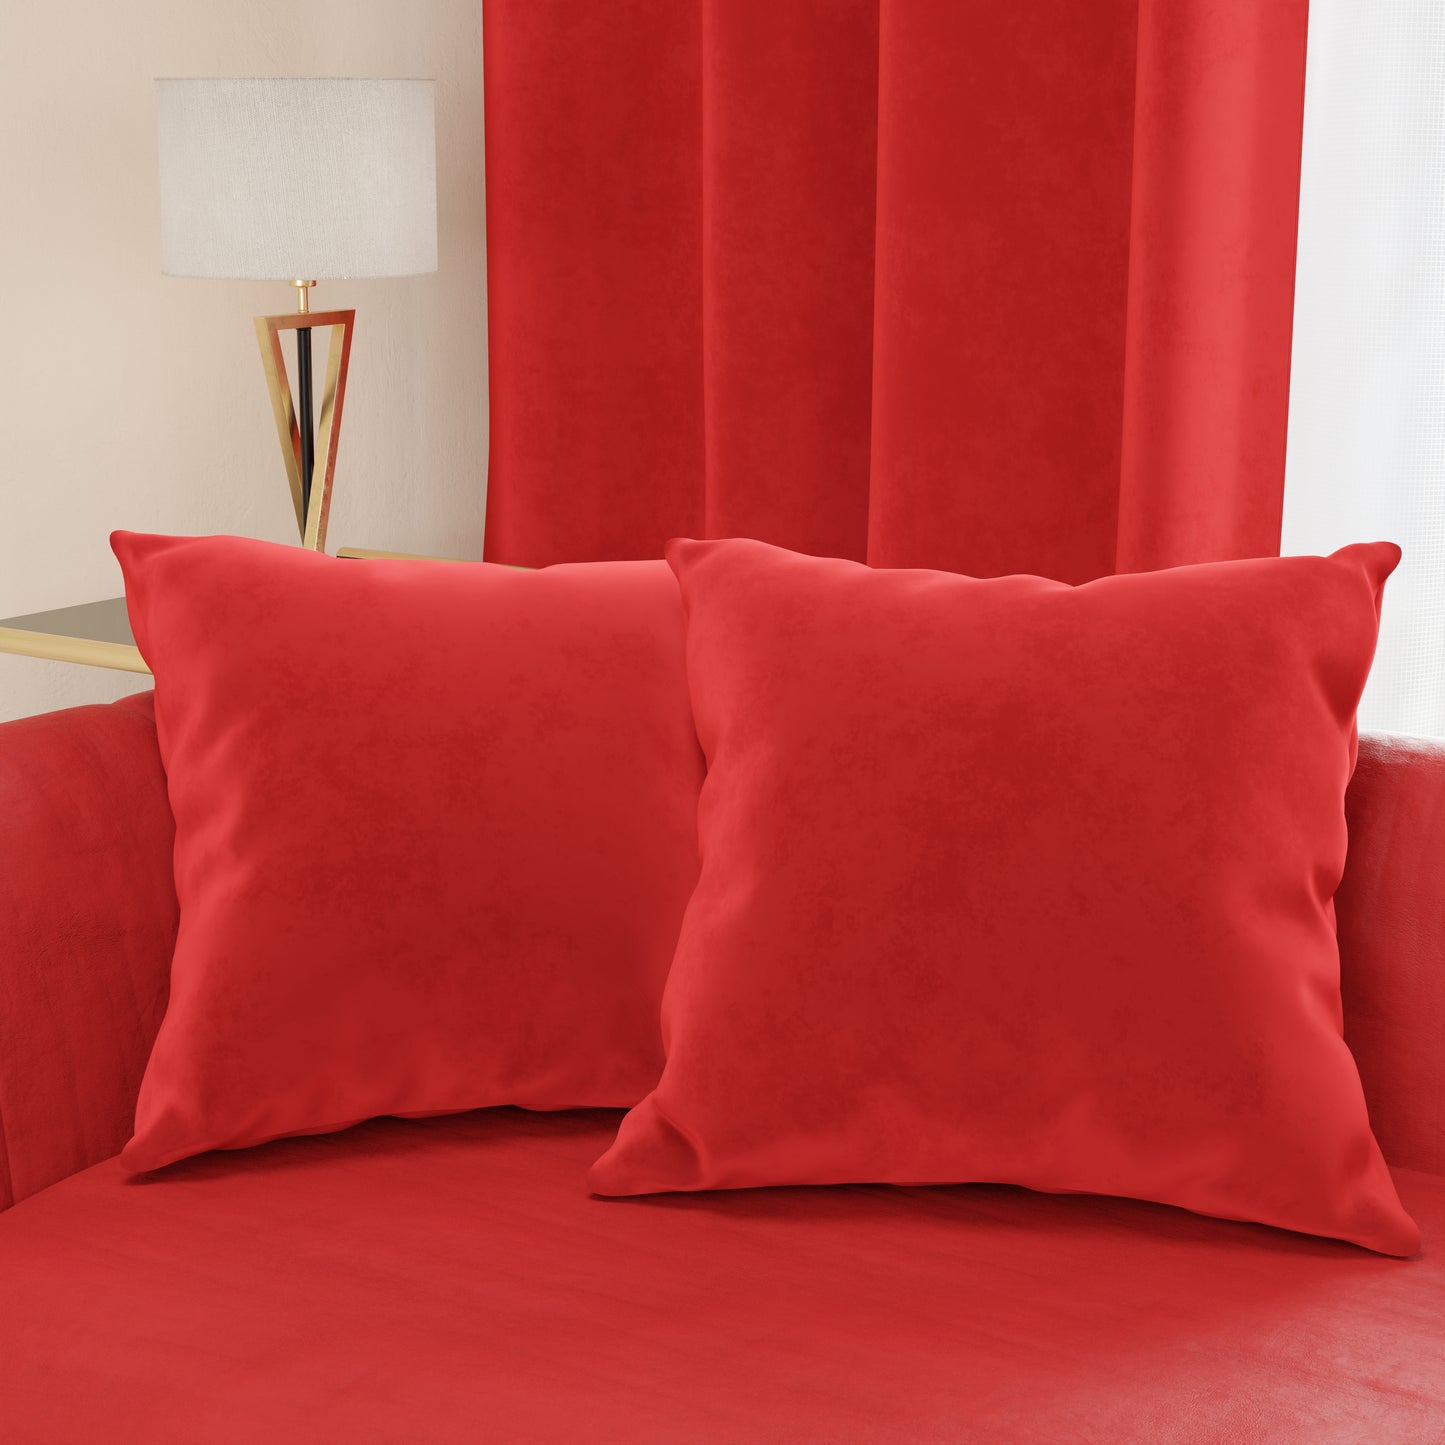 Cushions, Sofa Cushion Covers, Furnishing Cushions in Red Velvet 2pcs